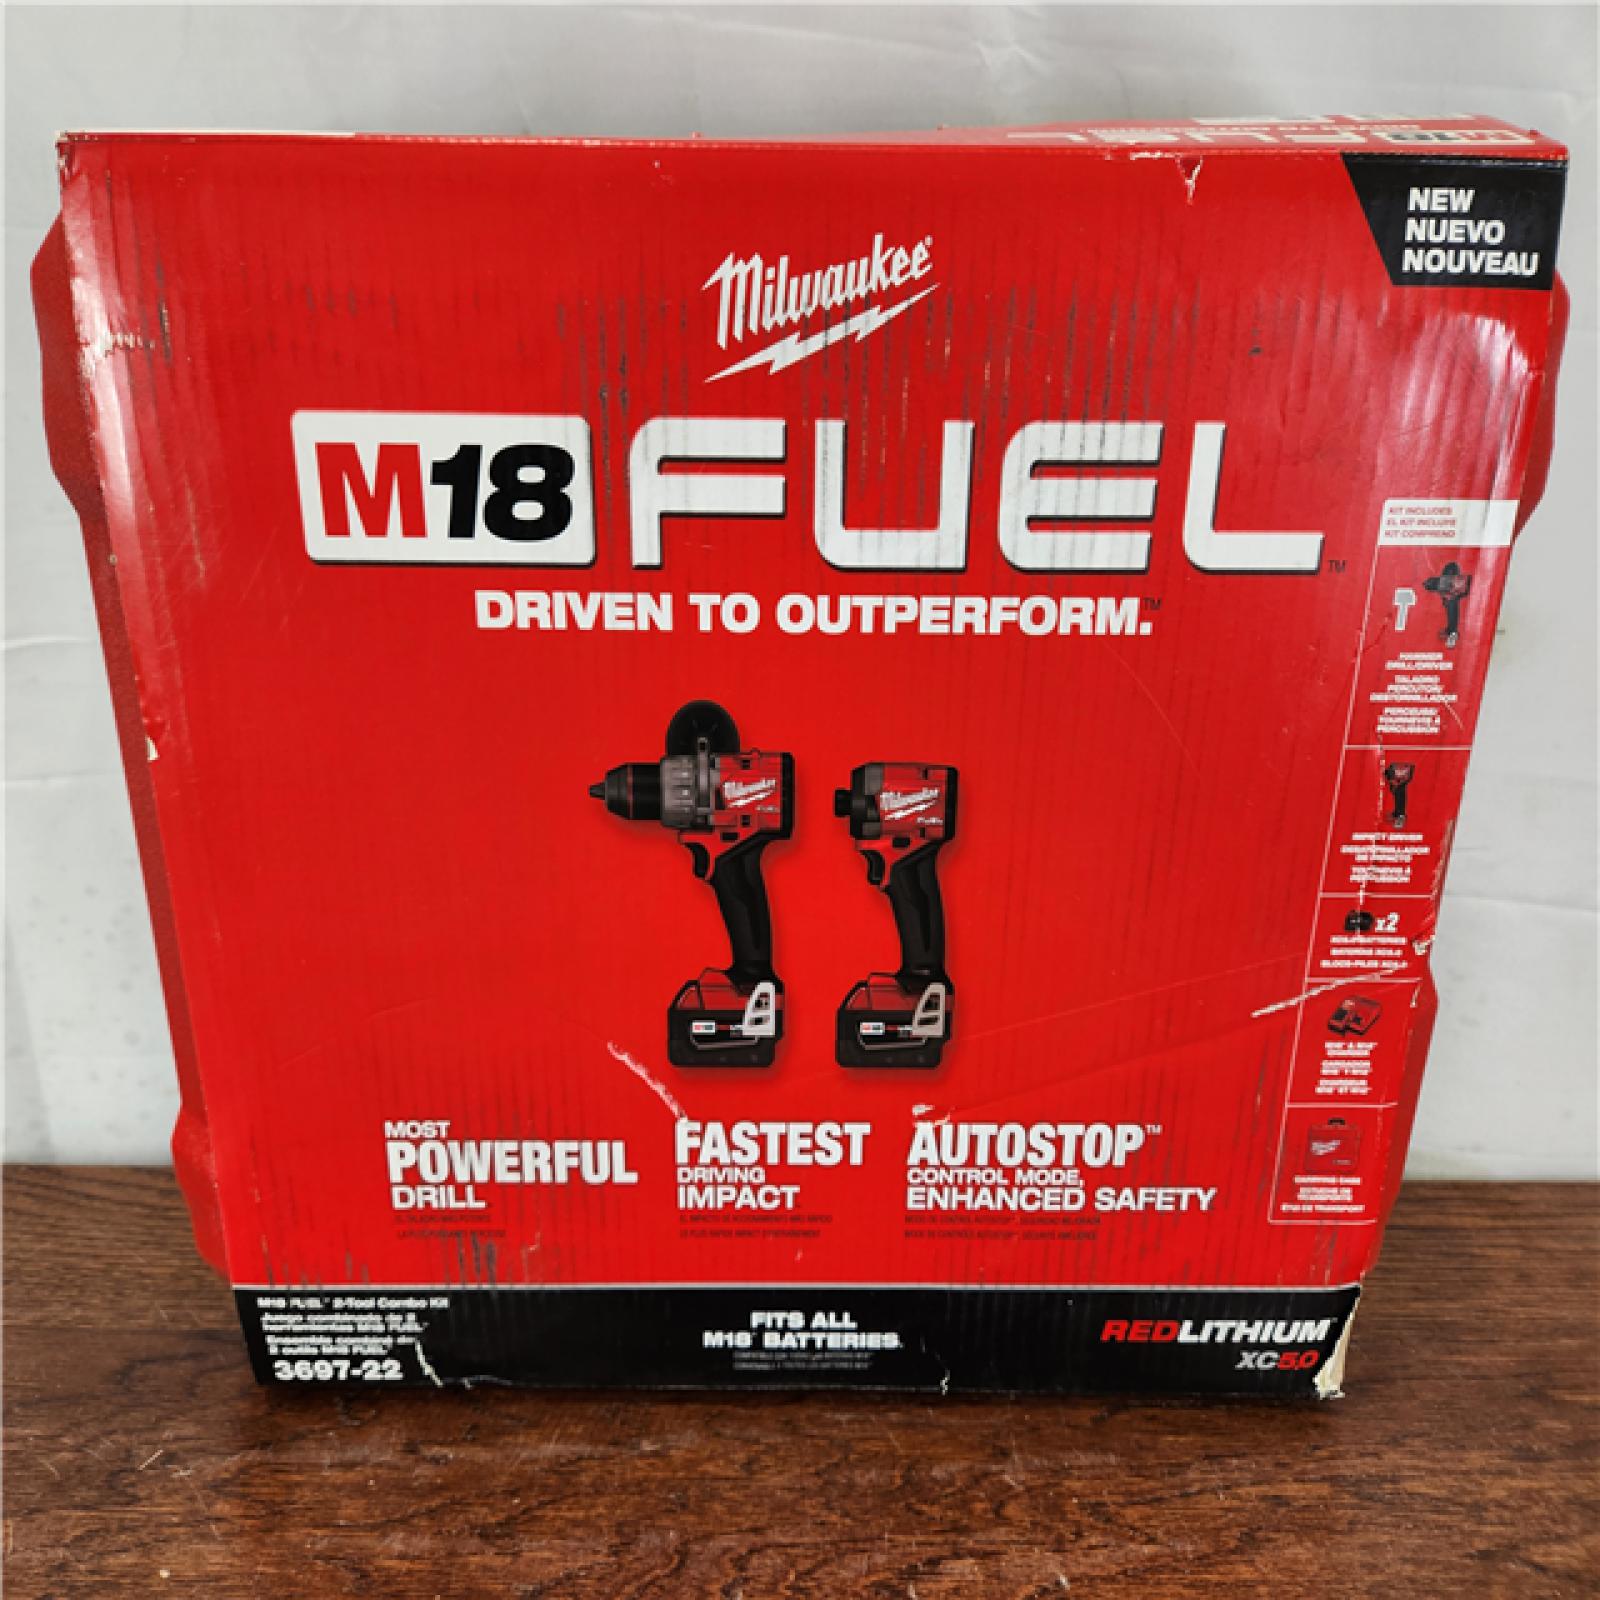 NEW! Milwaukee M18 FUEL Brushless Cordless (2 Tool) Combo Kit